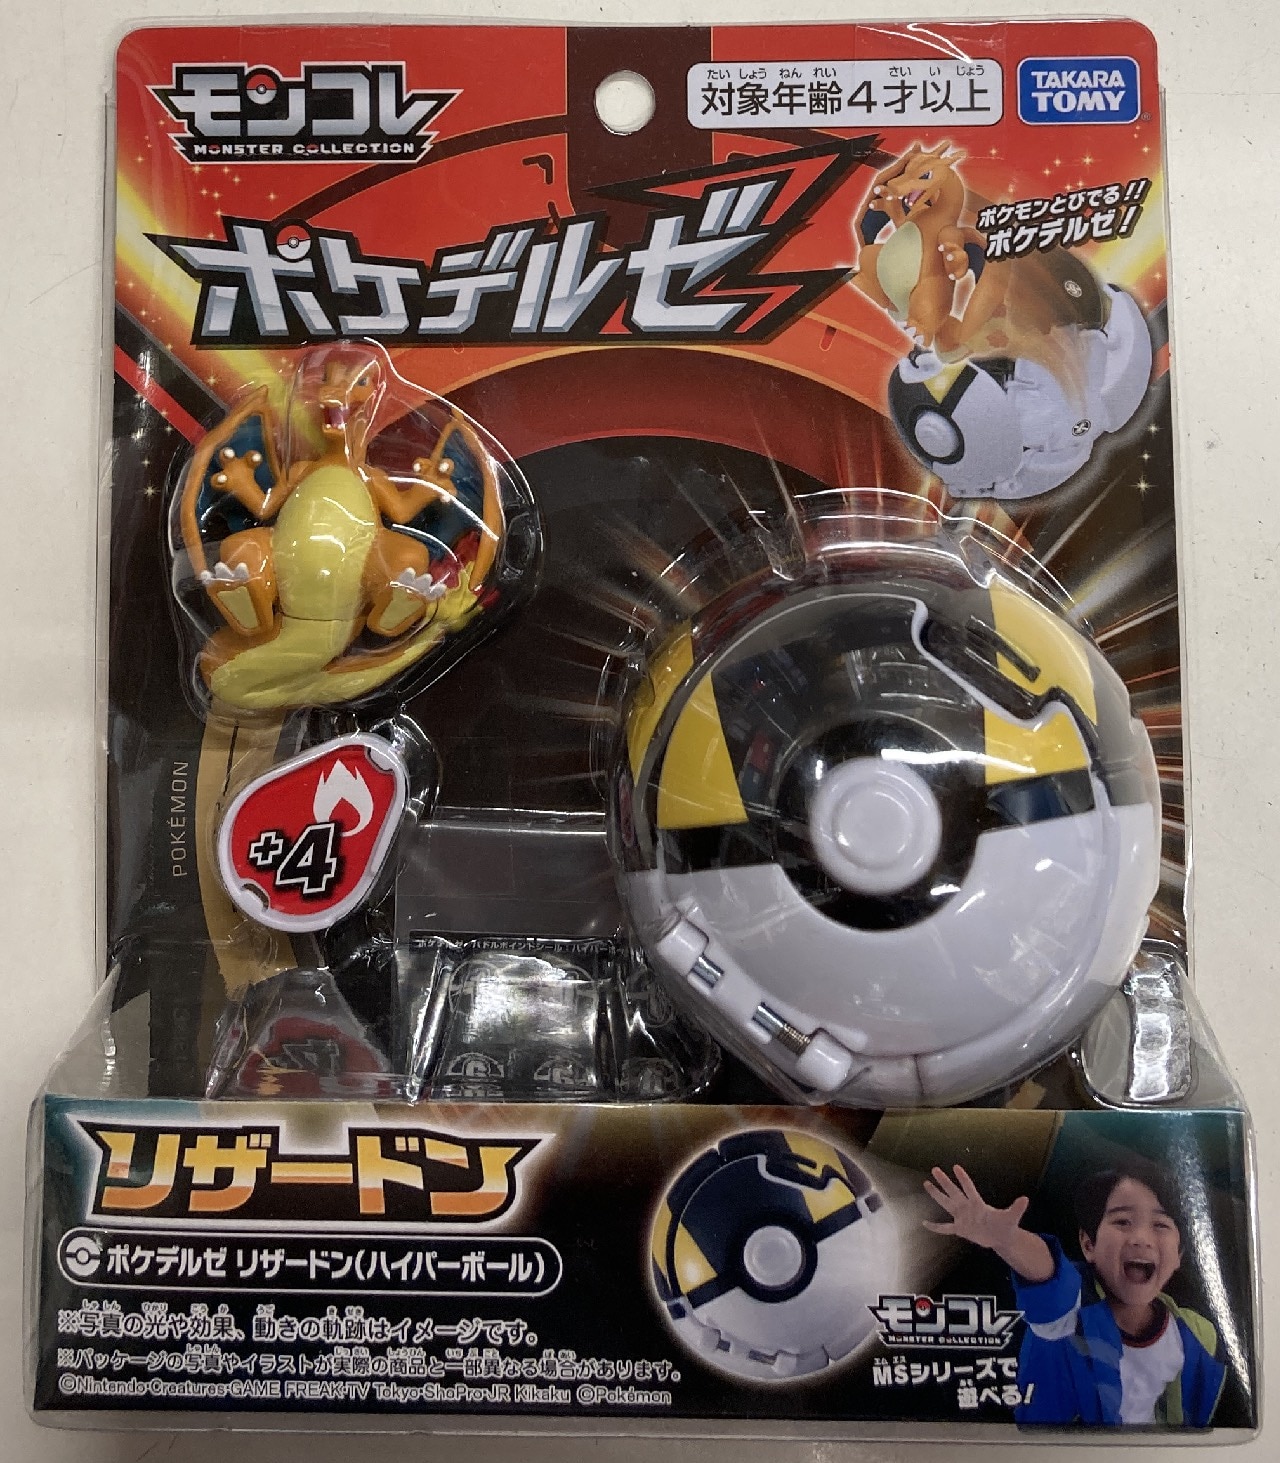 Takara Tomy Pokémon MS-32 Hinarashi 4cm Oficial - Shoptoys